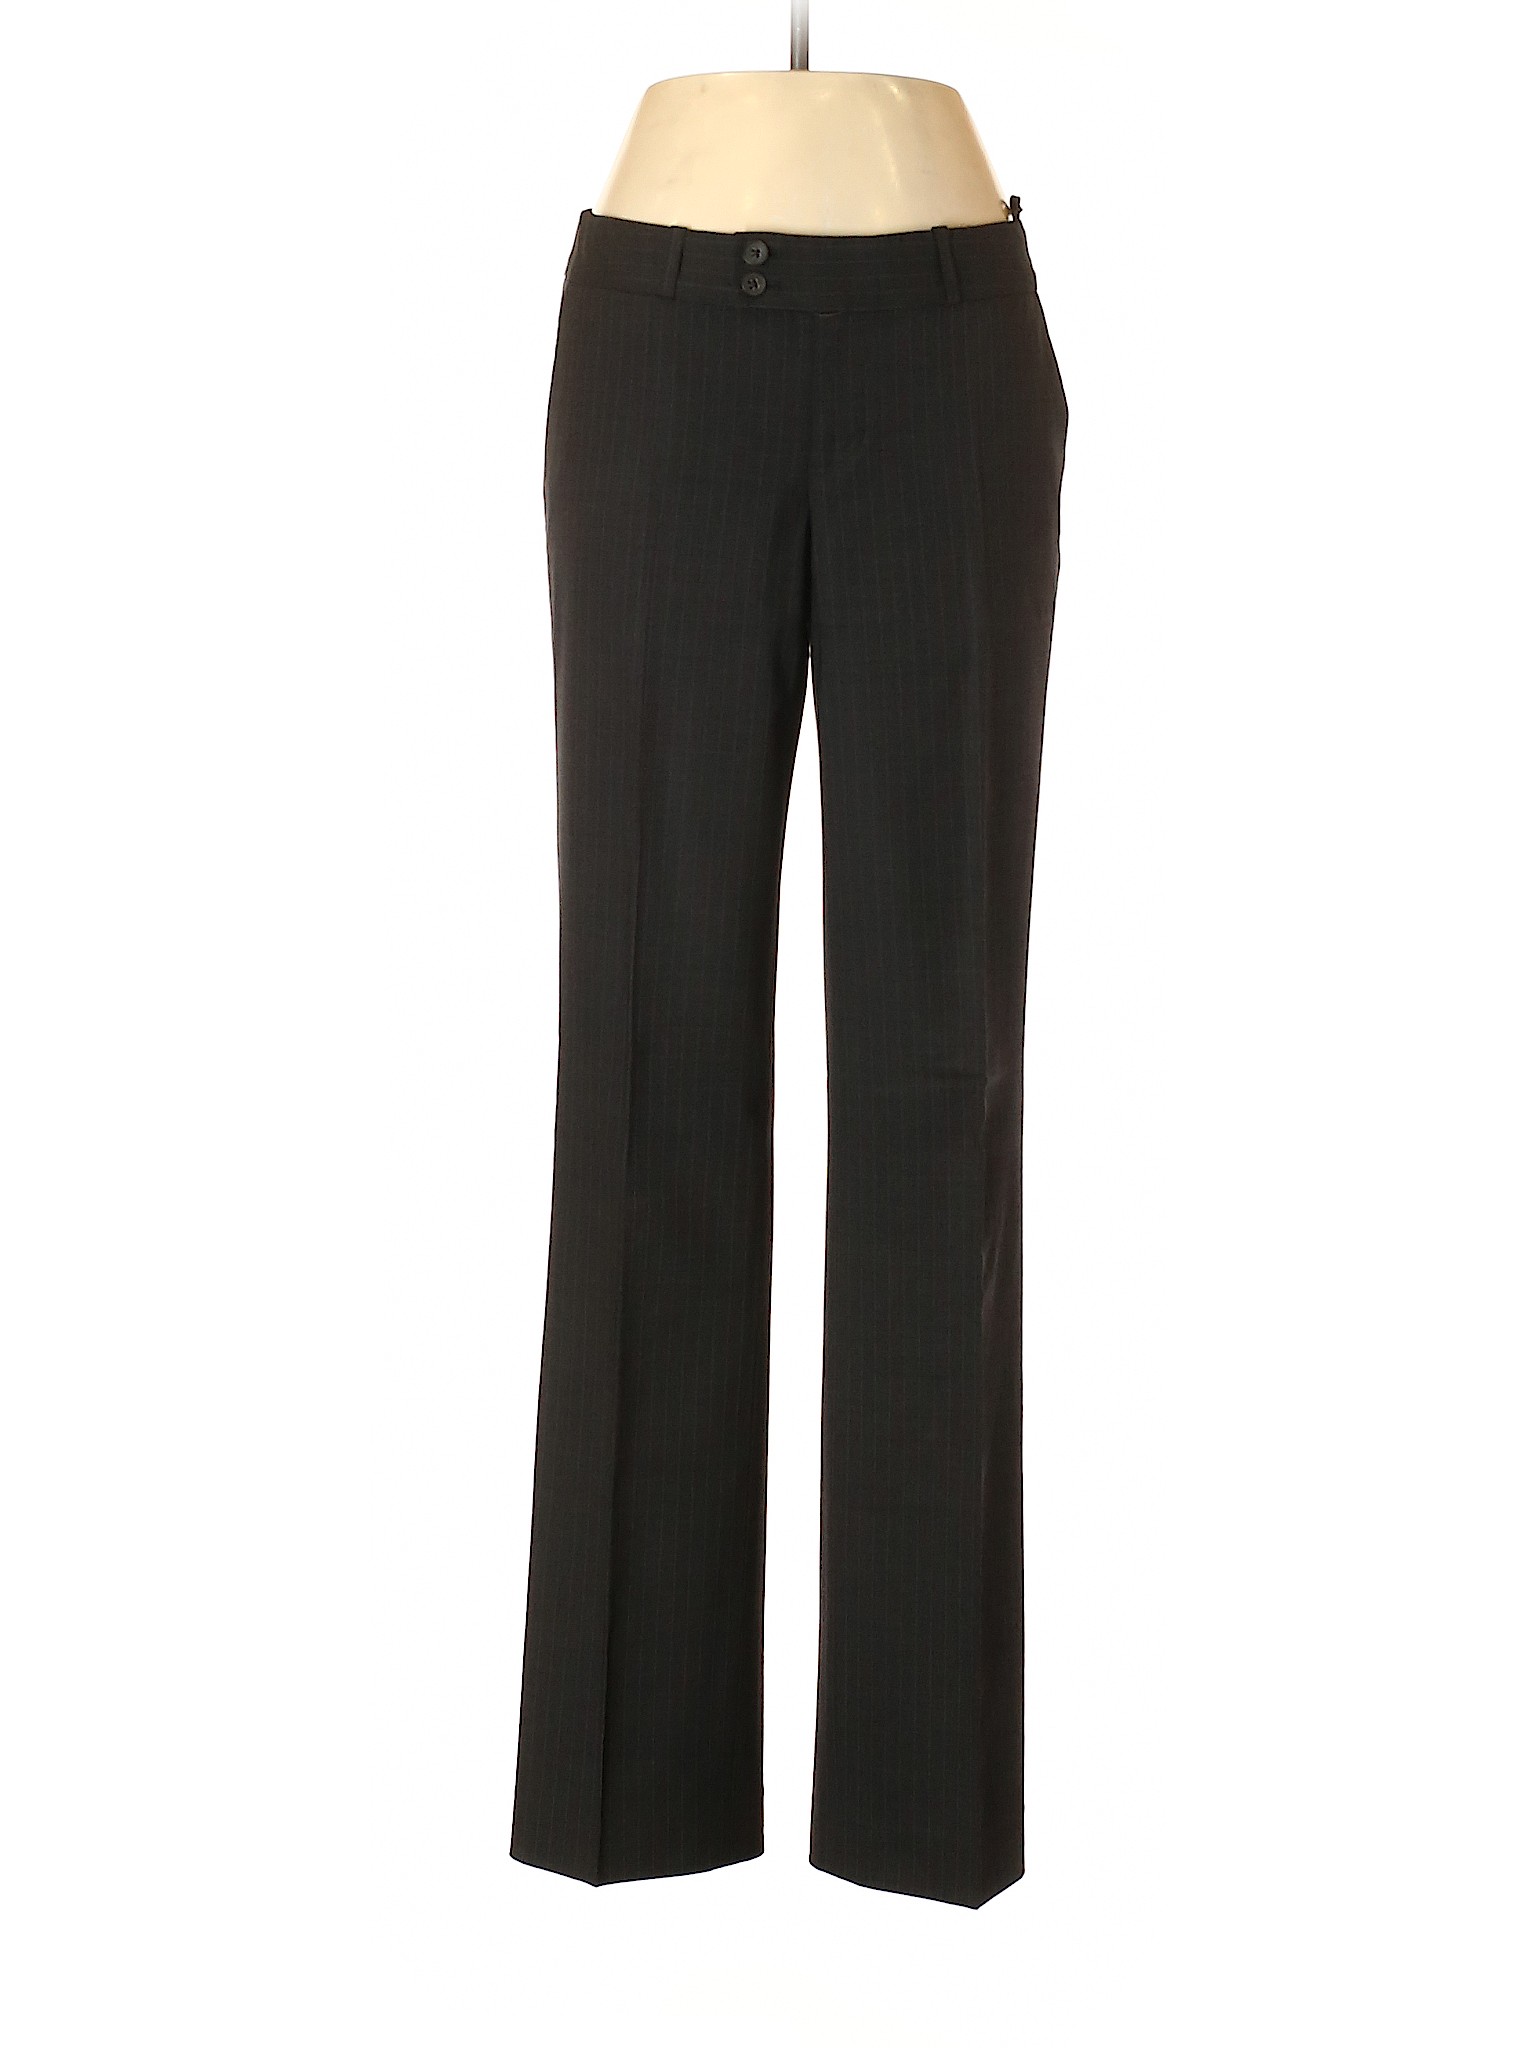 Club Monaco Women Black Wool Pants 4 | eBay